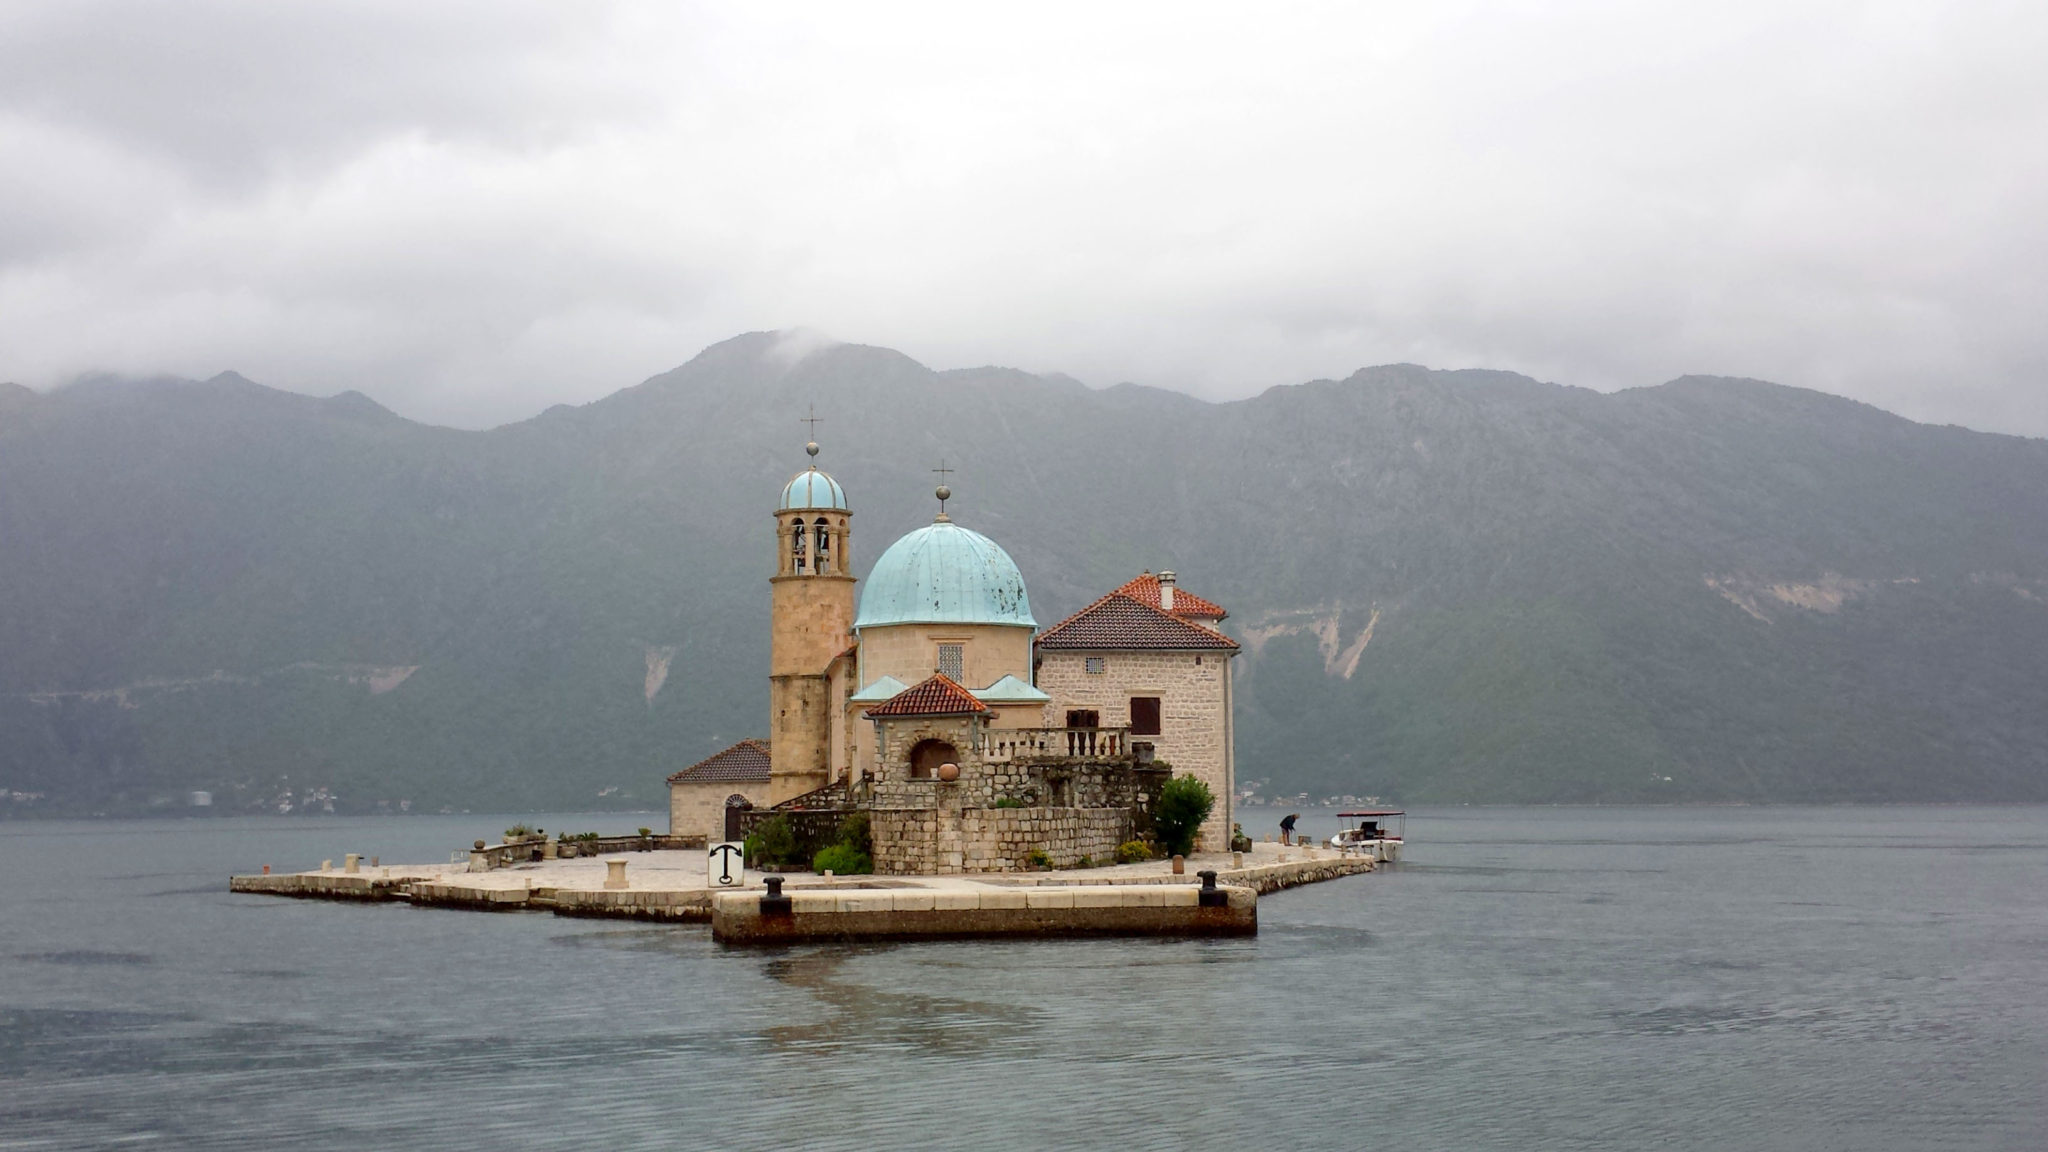 Hema_Montenegro_Perast_gospa_od_skrpjela_from_the_boat